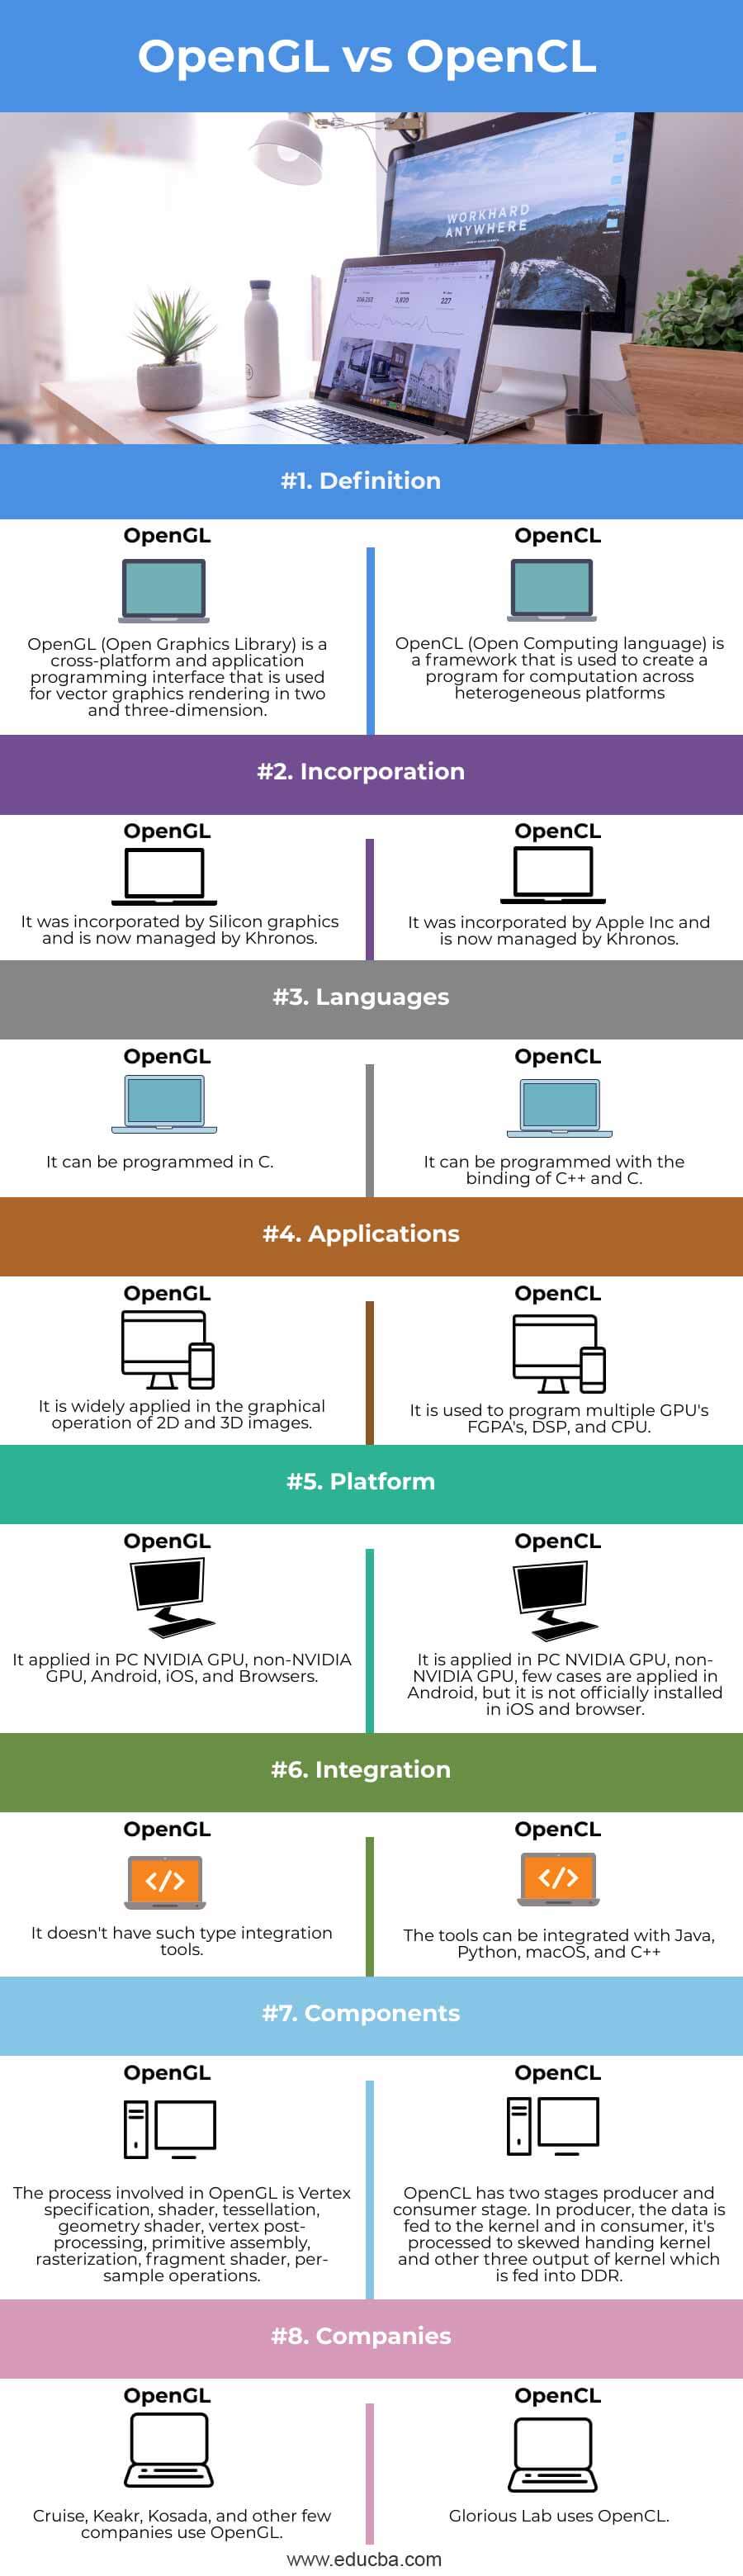 OpenGL-vs-OpenCL-info